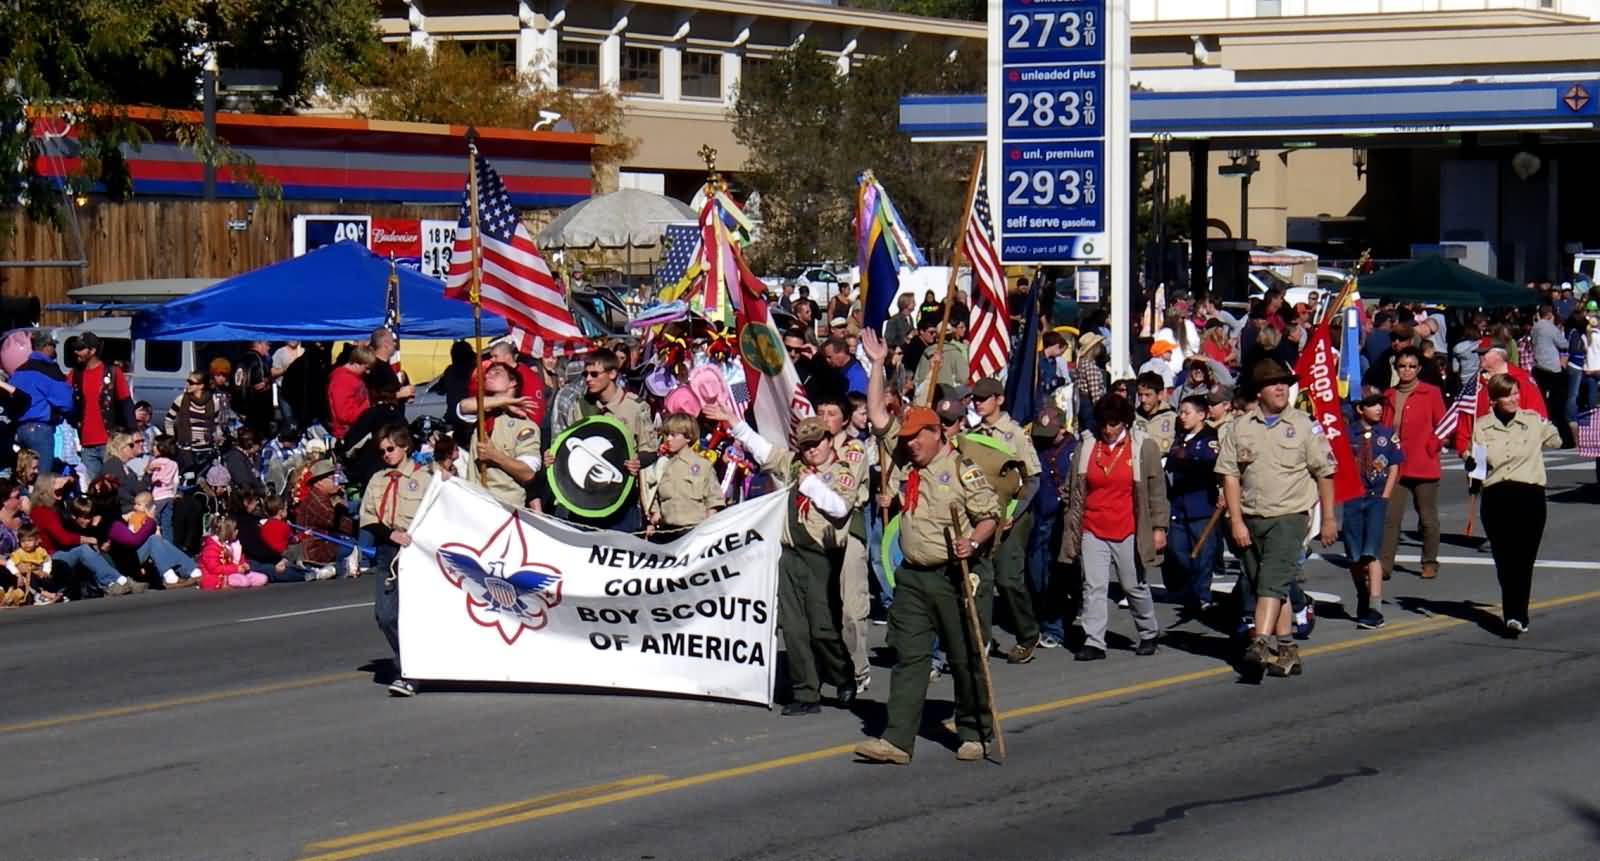 Nevada Area Council Boy Scout Parade During Nevada Day Celebration